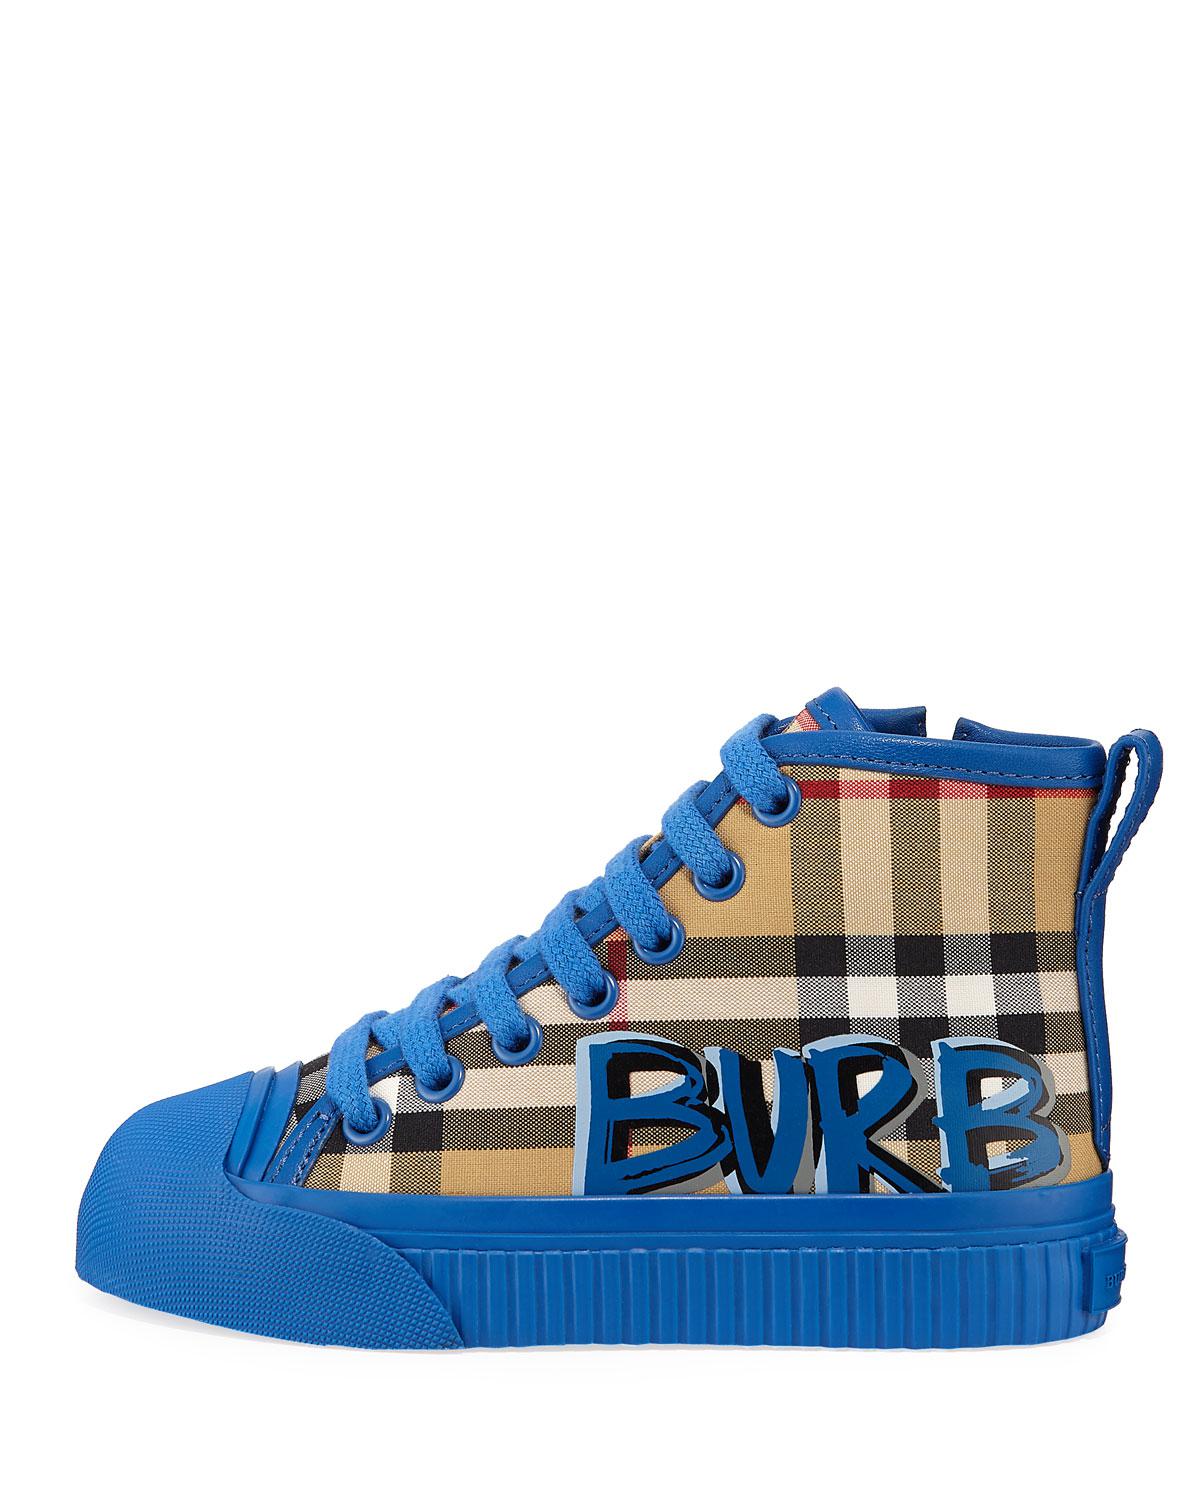 blue burberry shoes